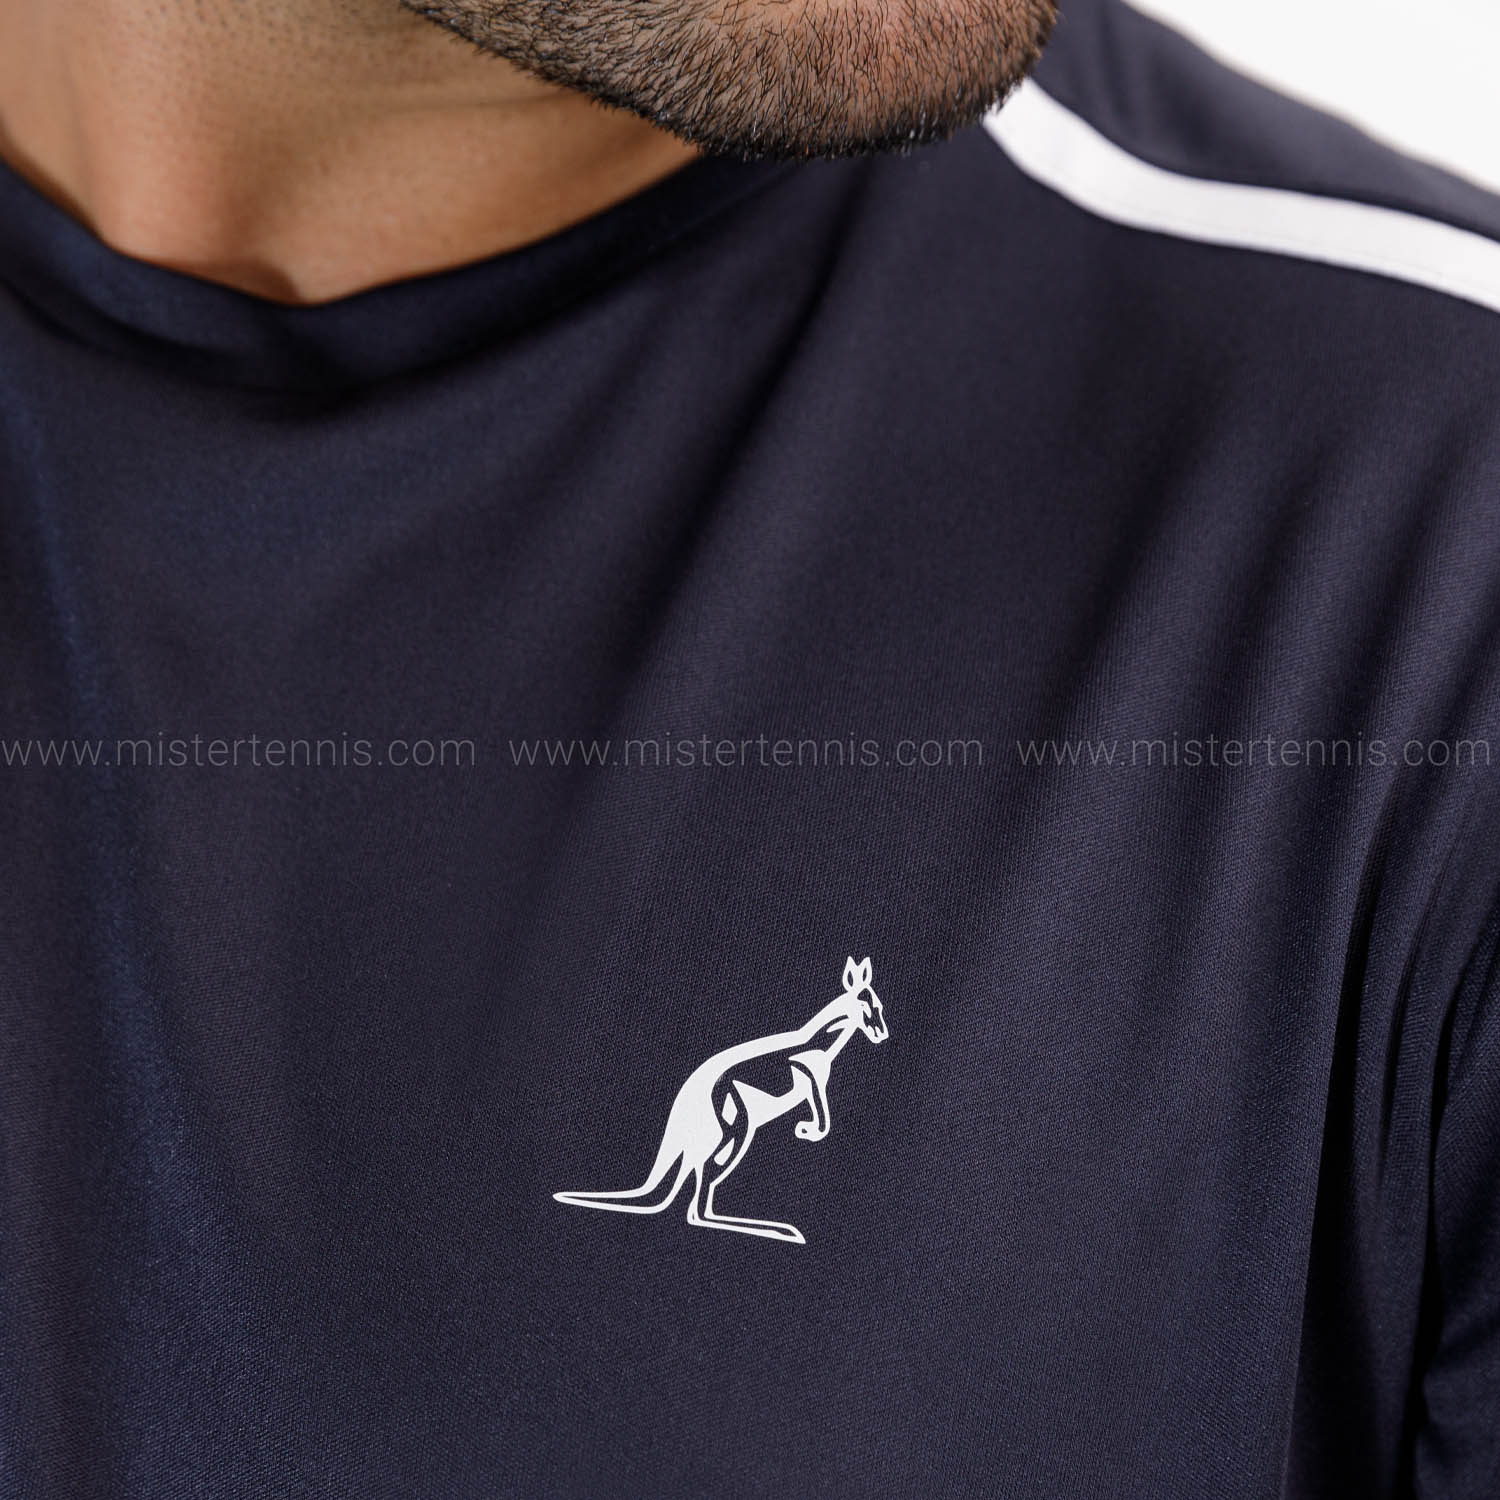 Australian Ace Camiseta - Blu Navy